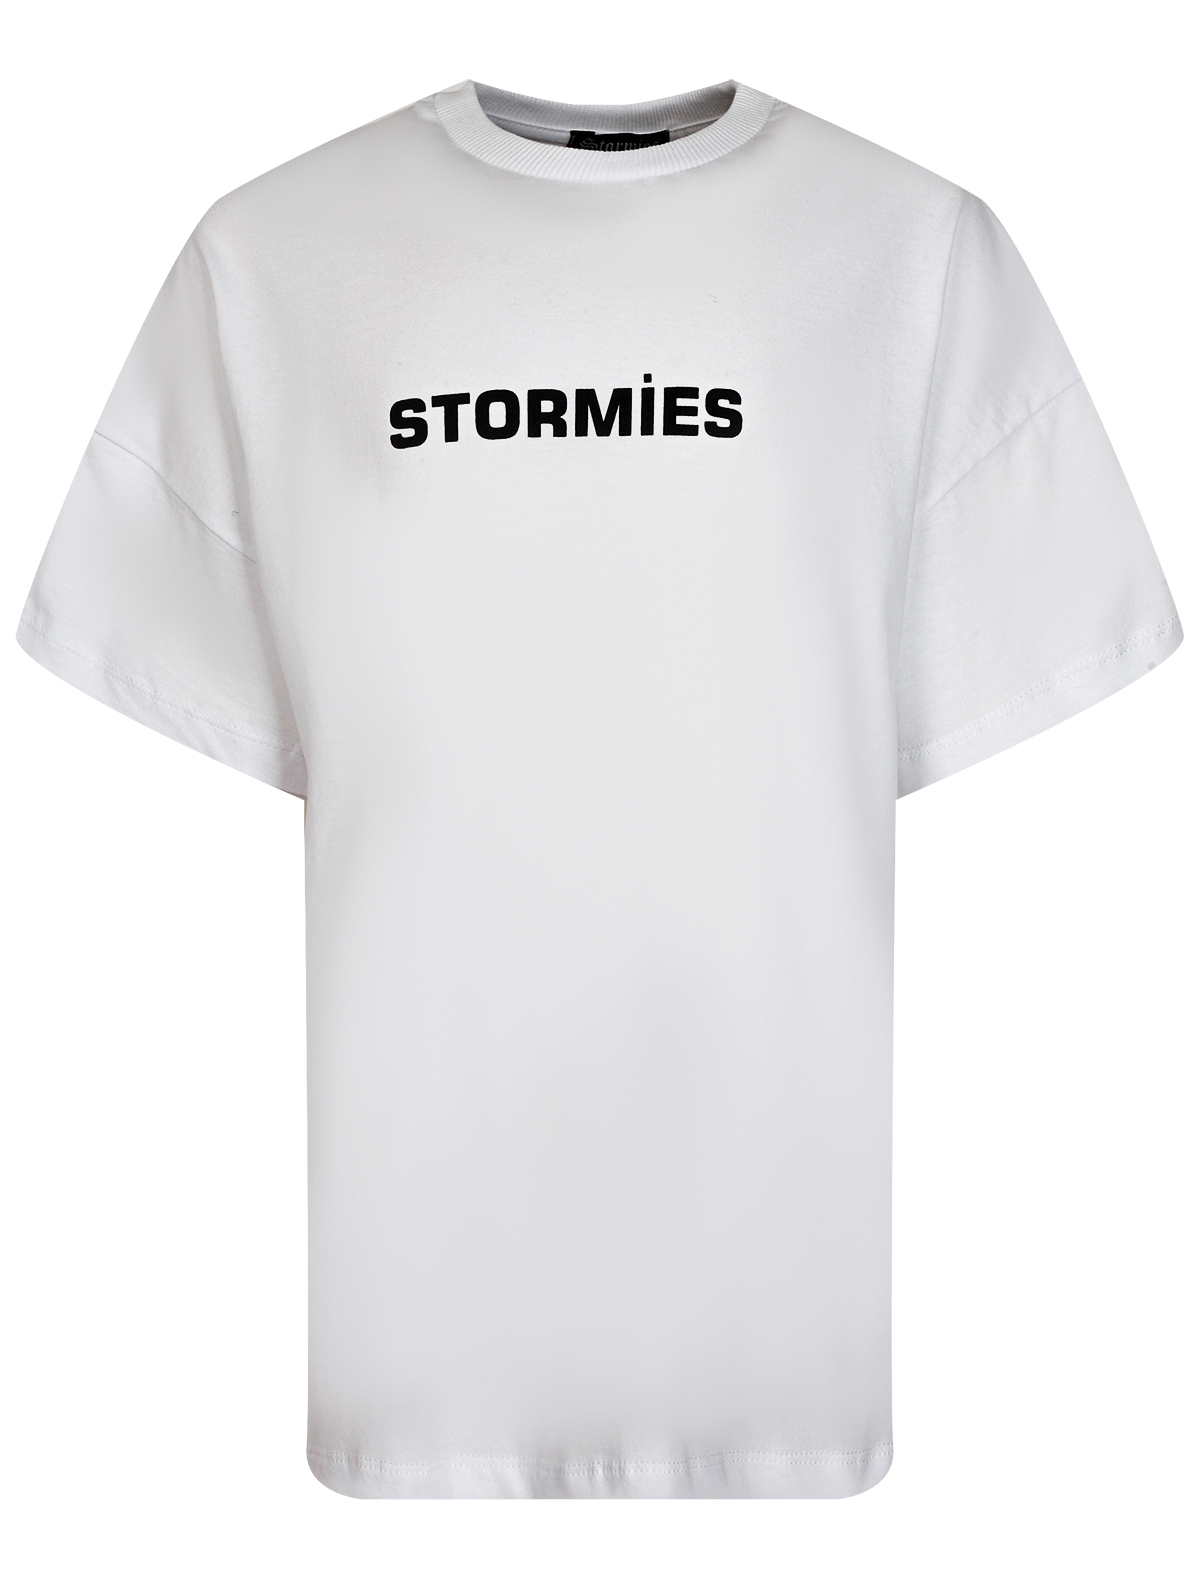 Футболка Stormies 2615501, цвет белый, размер 9